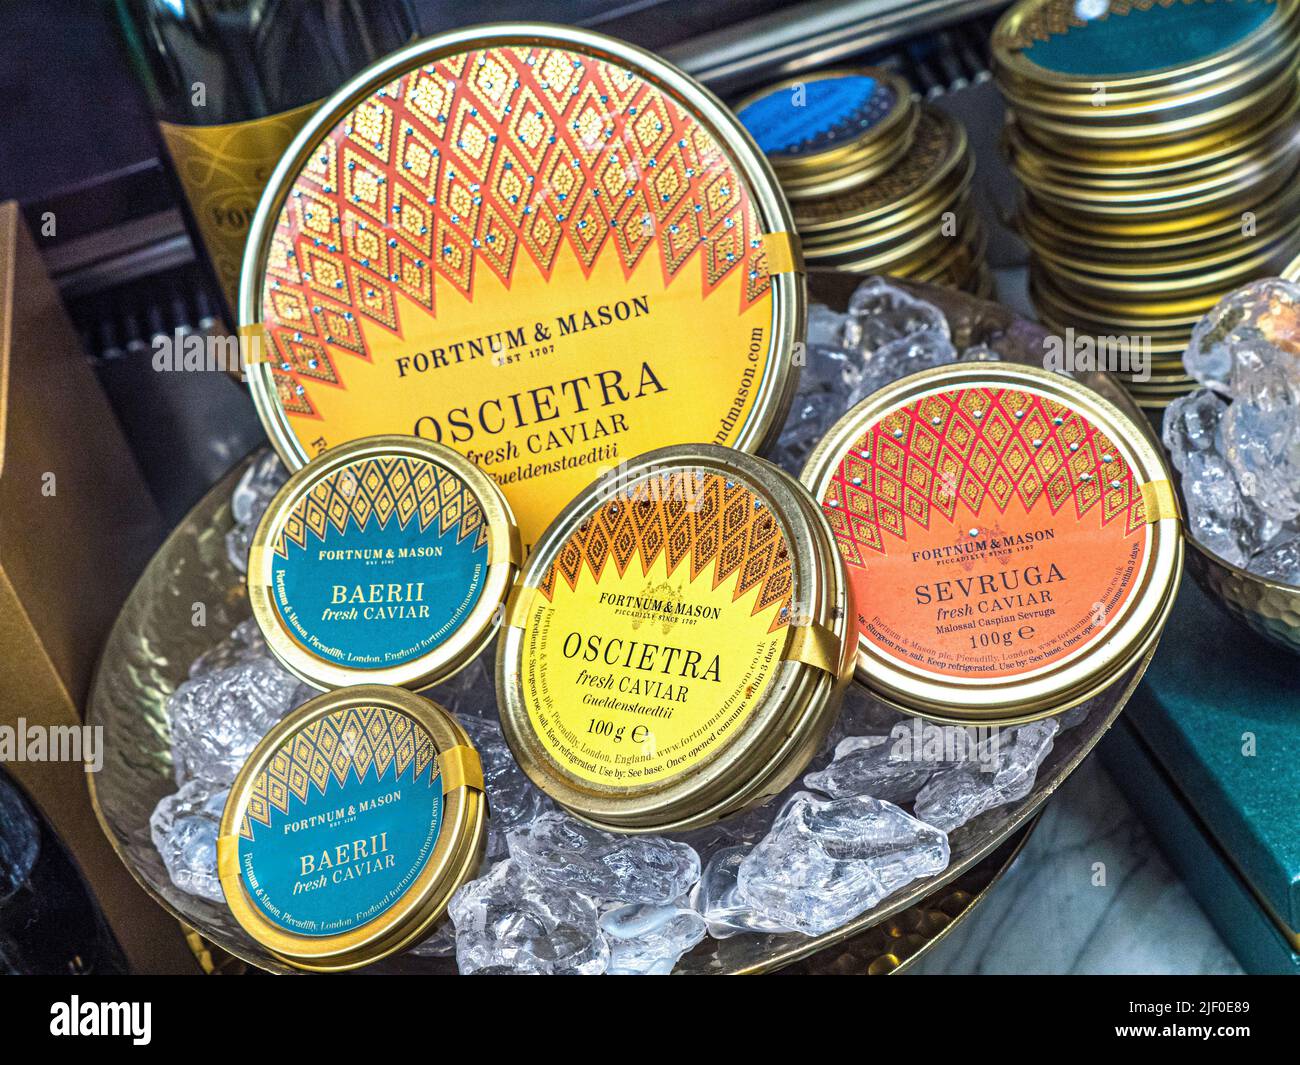 CAVIAR RUSSIAN VARIETIES ON SALE DISPLAY Fortnum & Mason Food Hall with cabinet display of Fortnums branded Caviar varieties Beluga Oscietra Sevruga.. Stock Photo